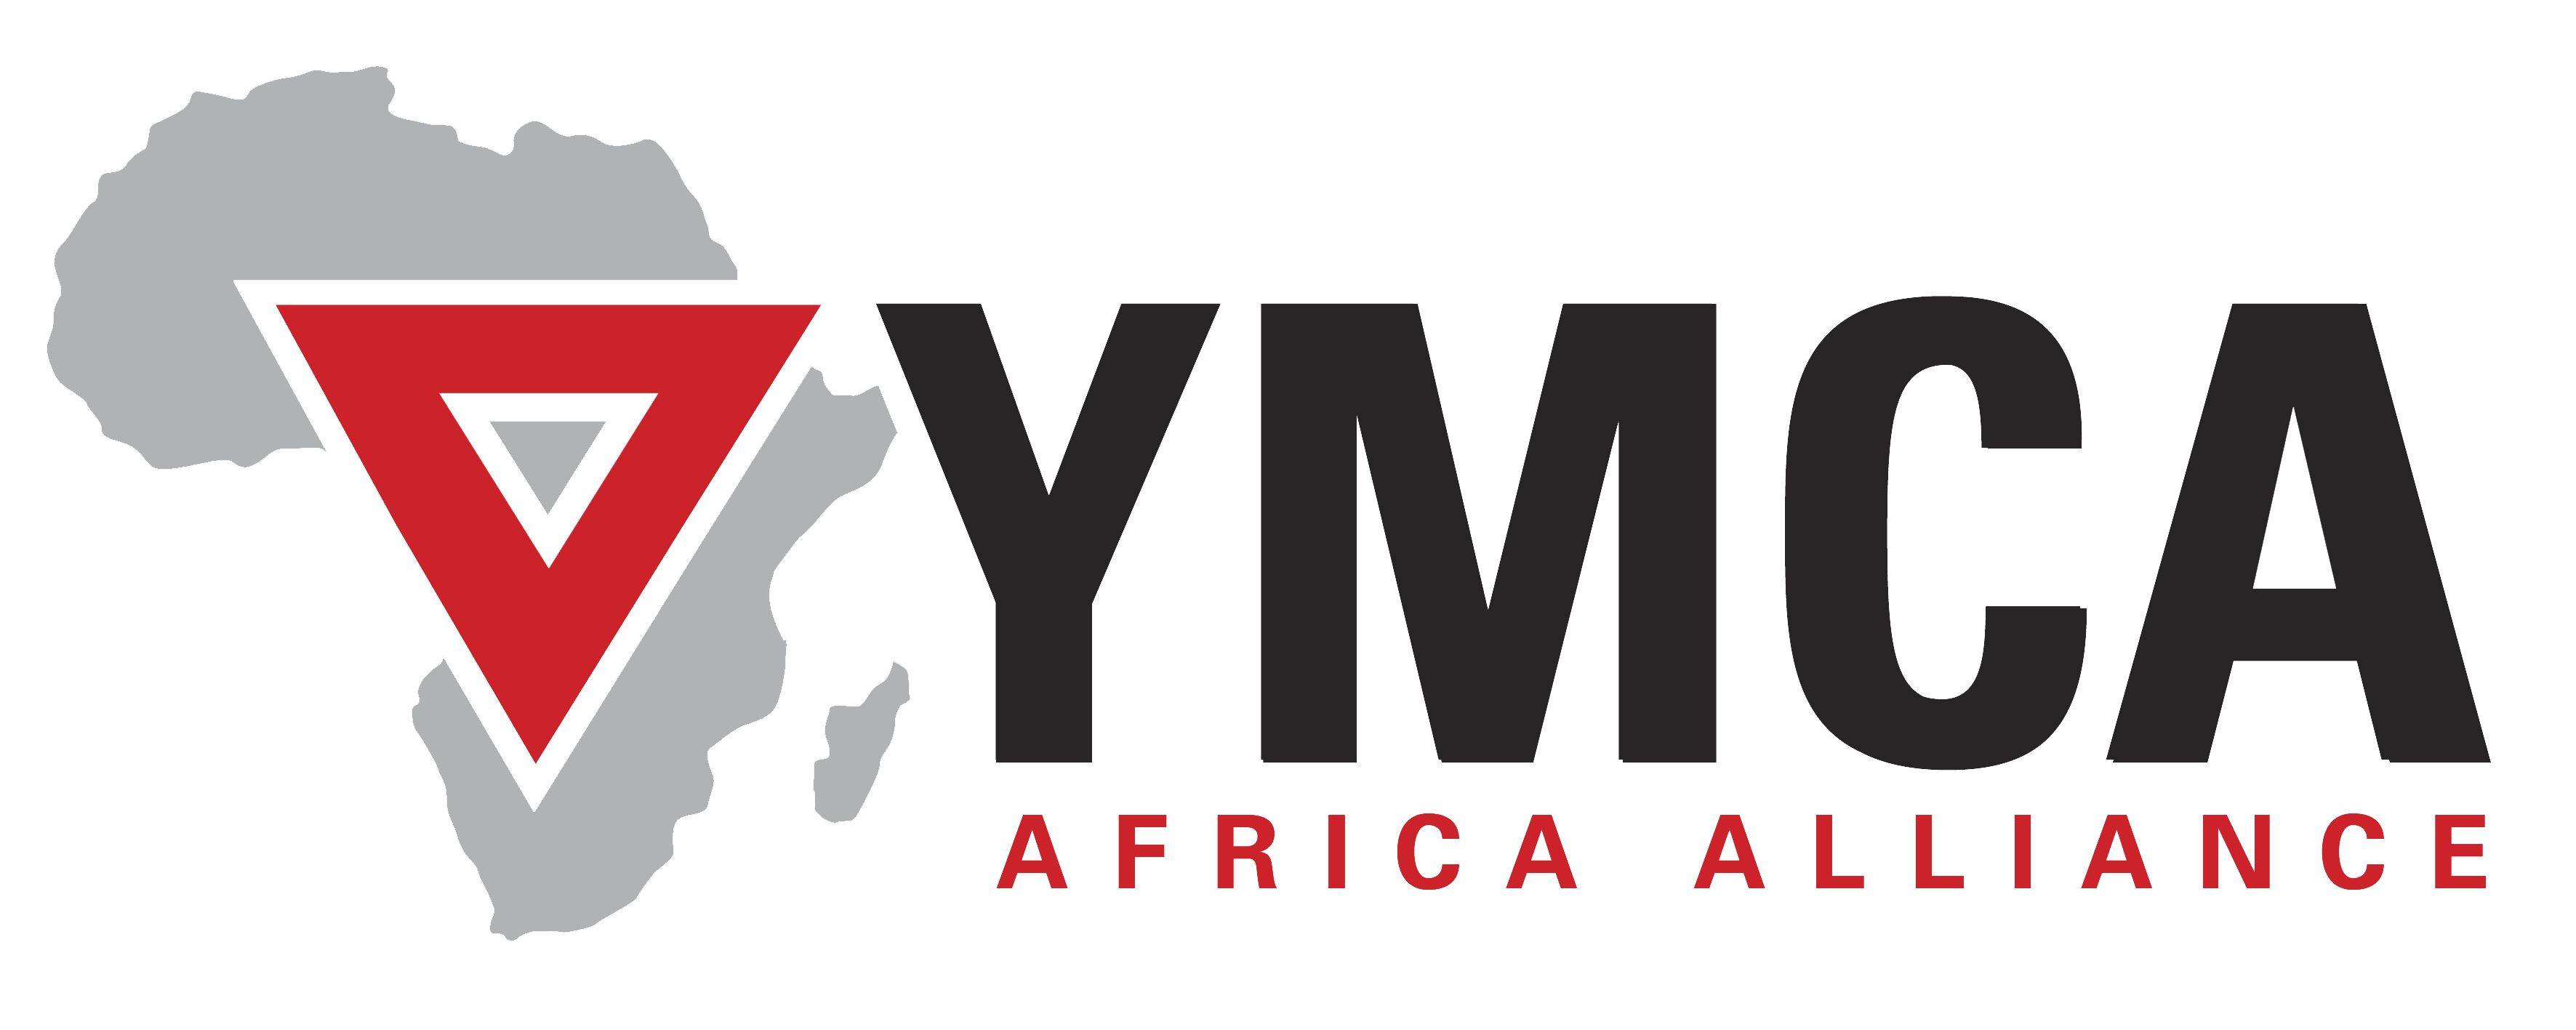 Farming God’s way concept with Kenya YMCA